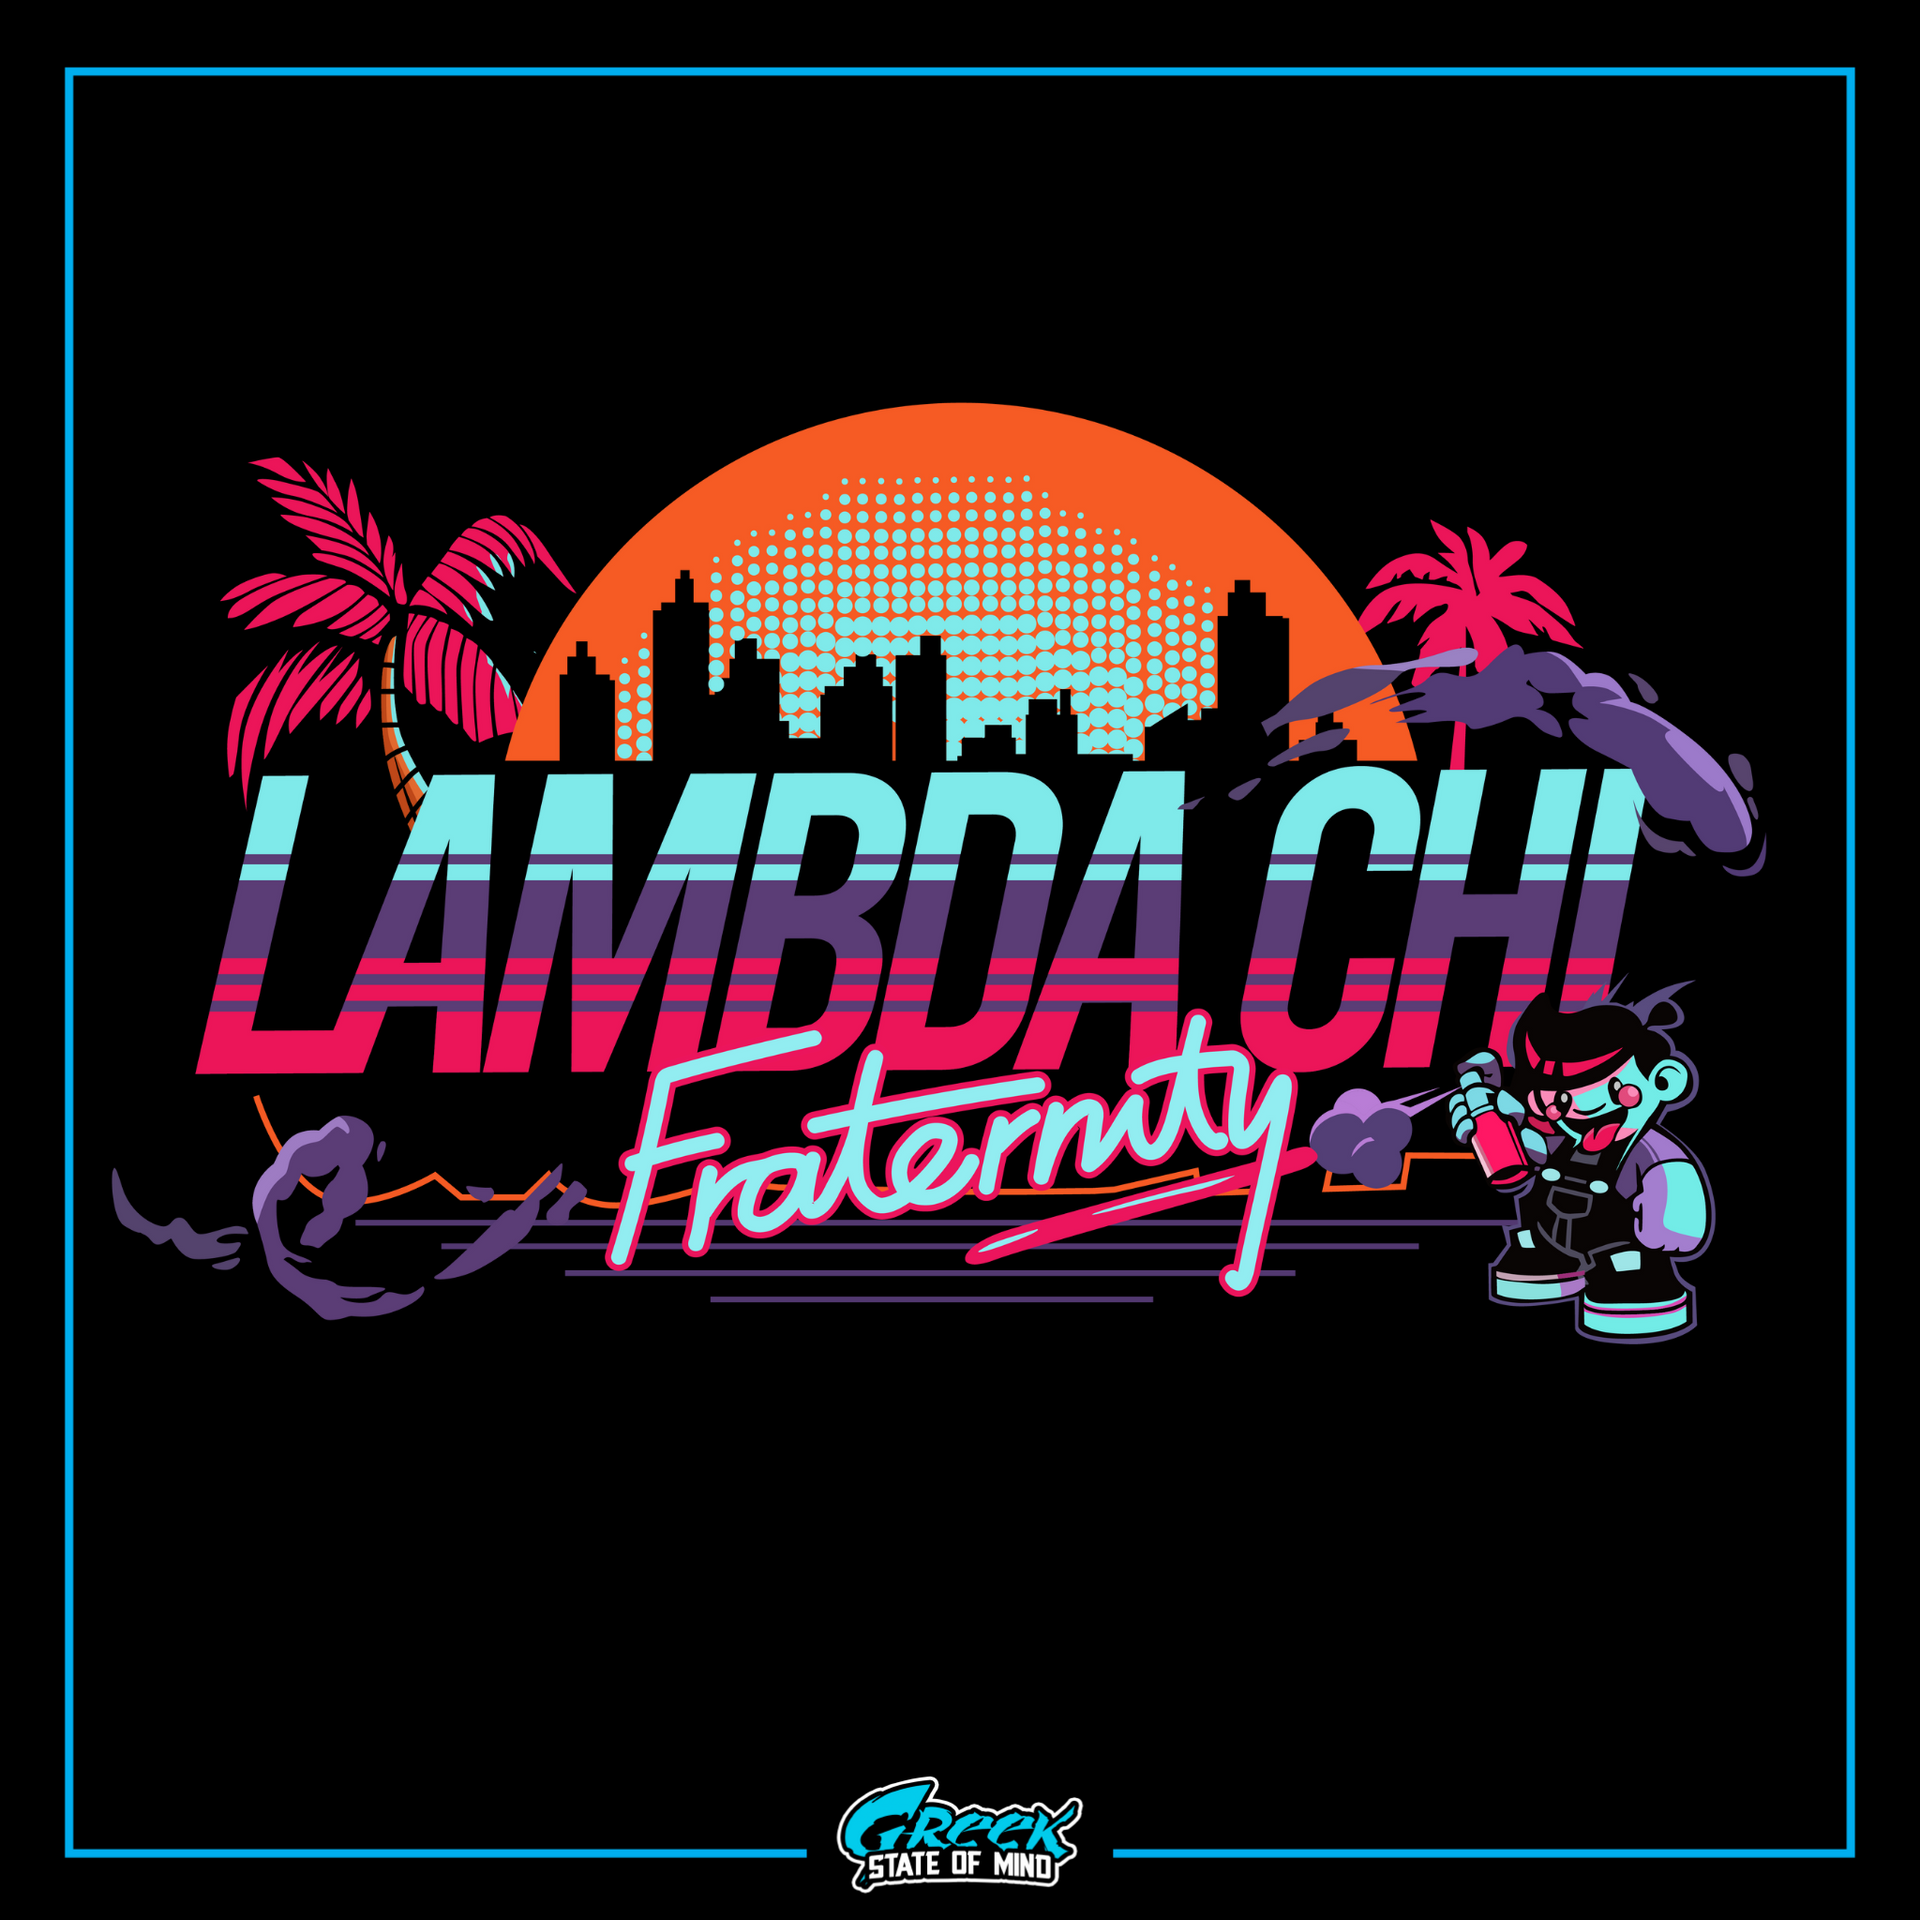 Lambda Chi Alpha Graphic Long Sleeve | Jump Street | Lambda Chi Alpha Fraternity Apparel design 